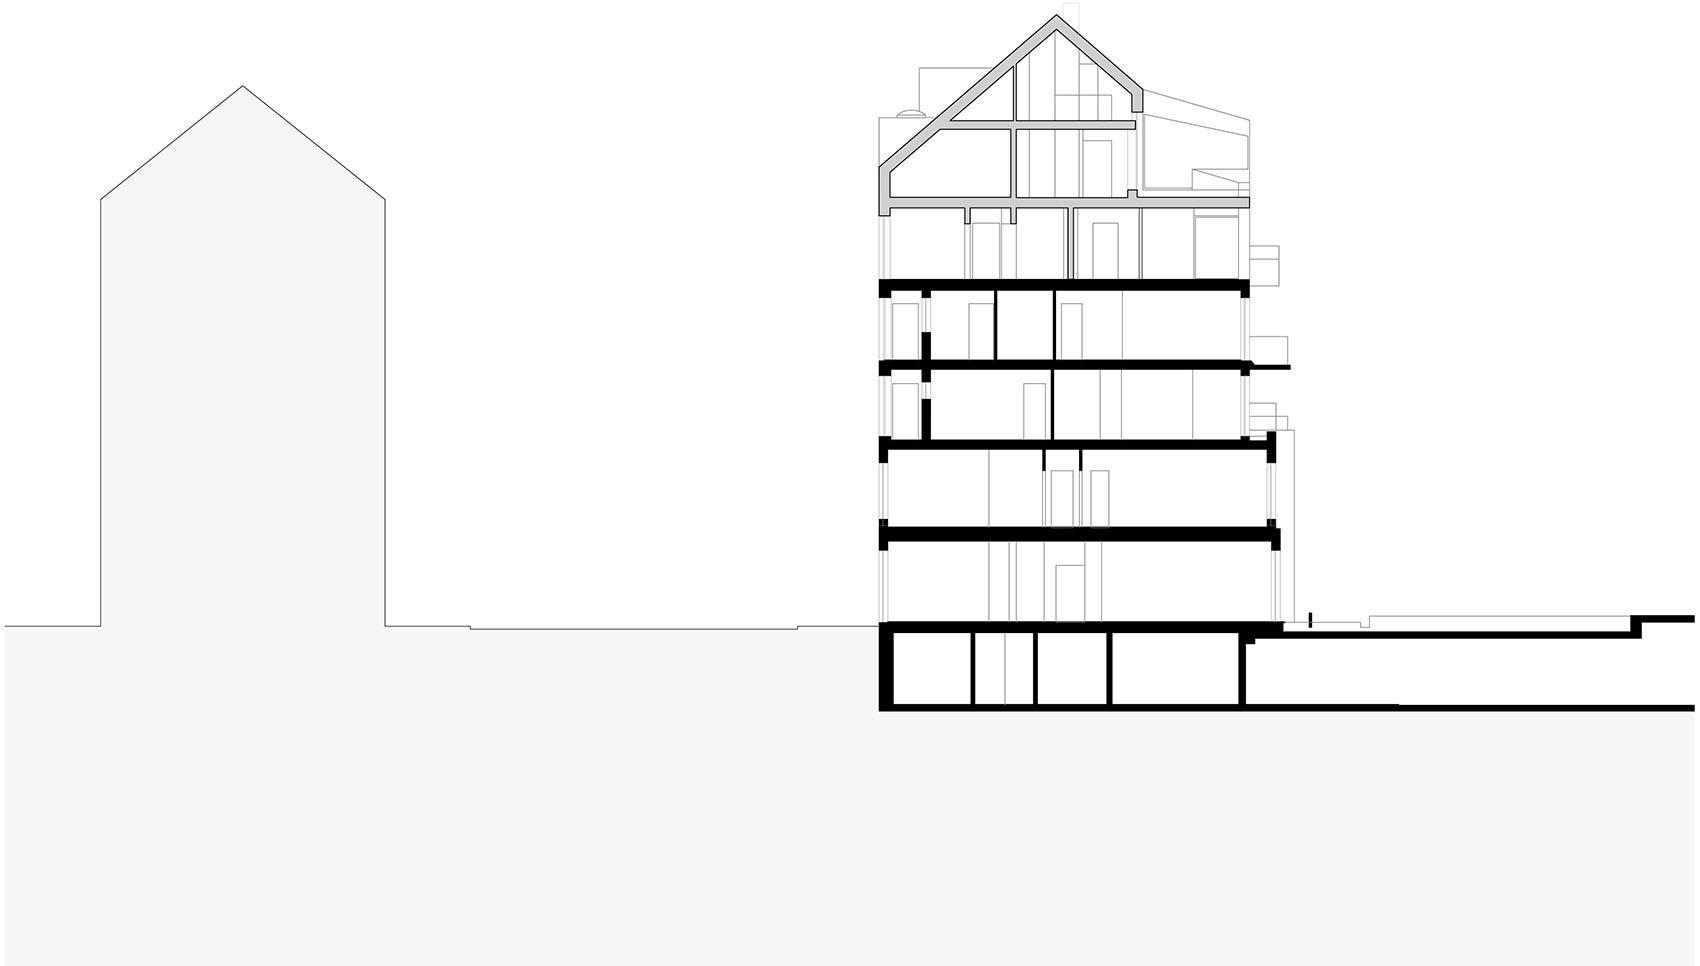 015-r11-roof-extension-maxvorstadt-by-pool-leber-architekten.jpg